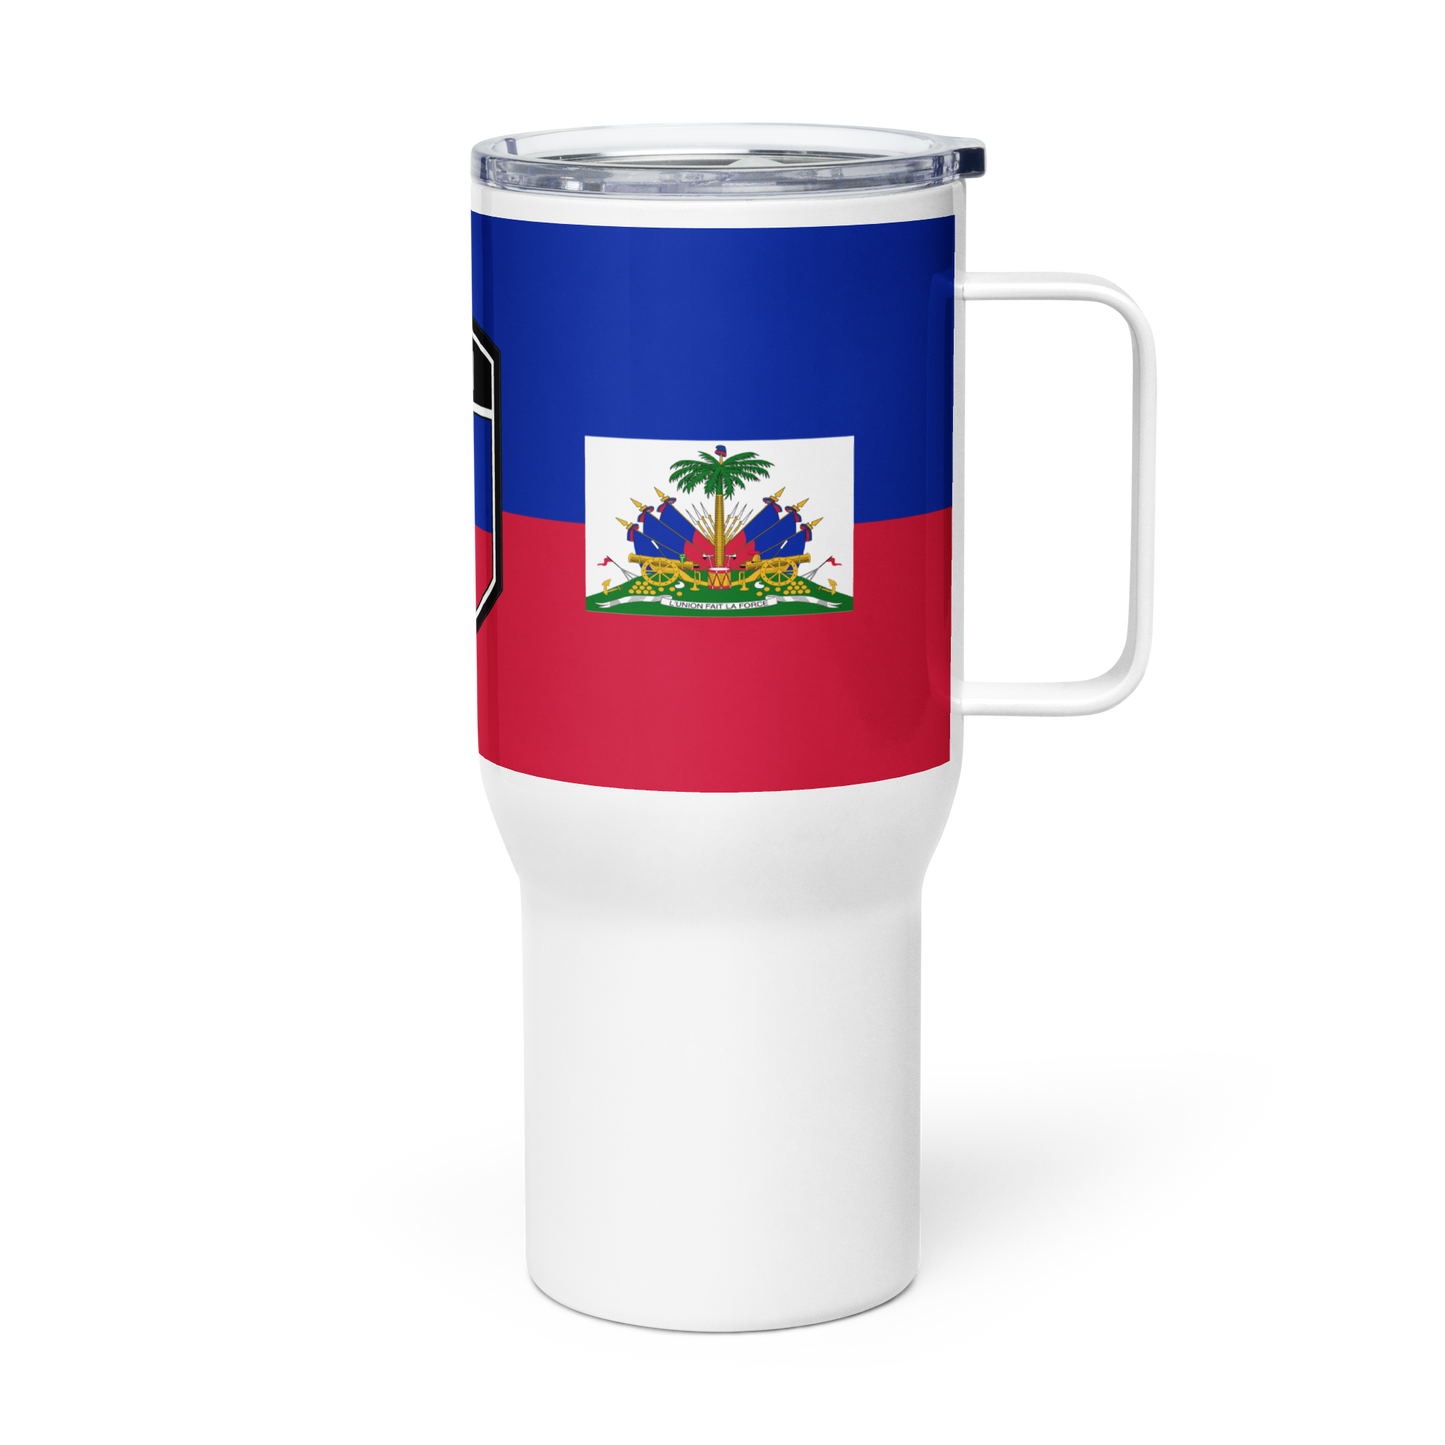 Haiti Travel mug with a handle